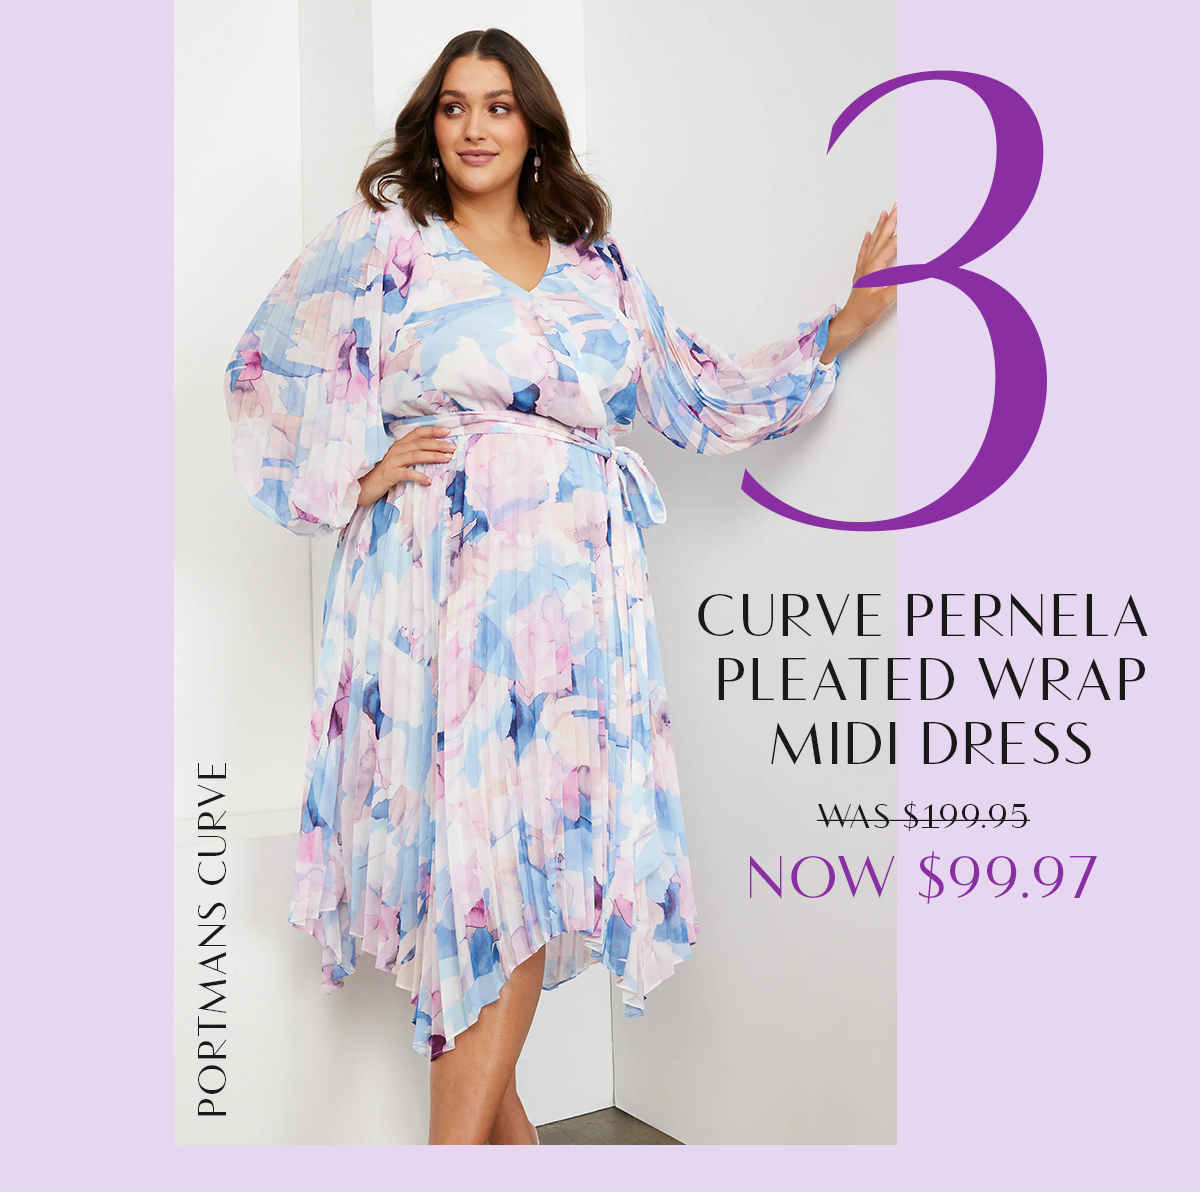 3 Curve Pernela  Pleated Wrap  Midi Dress  was $199.95 Now $99.97